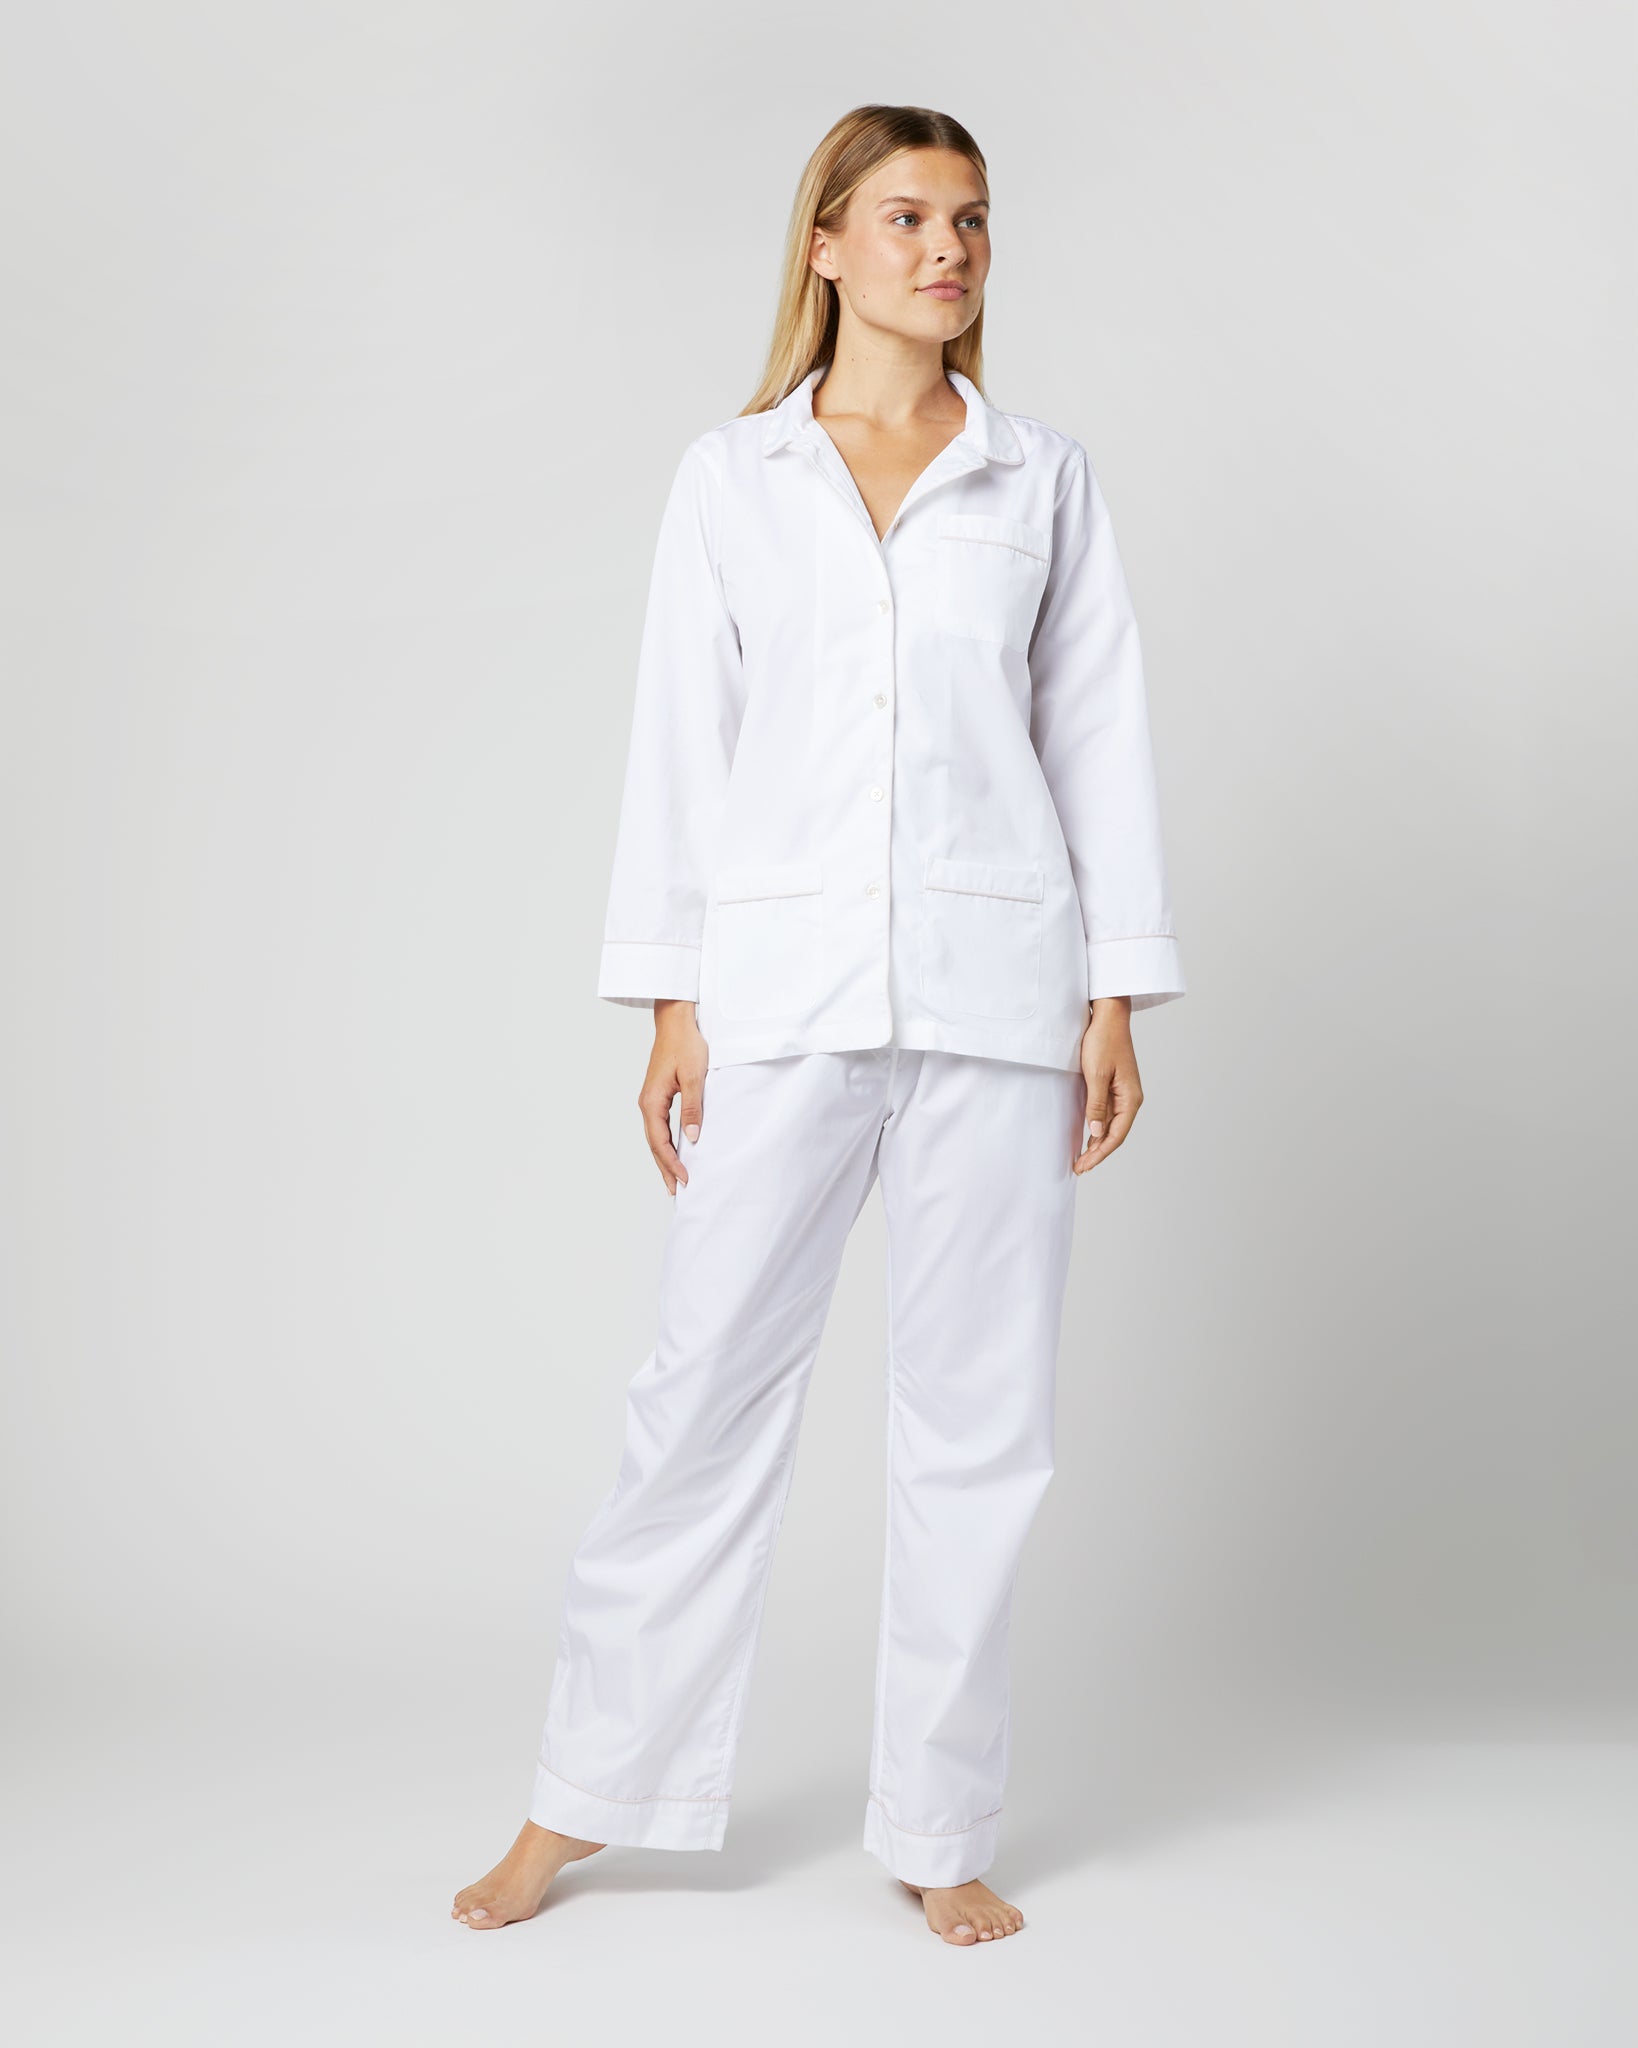 Pajama Set in White Poplin/Pink Trim